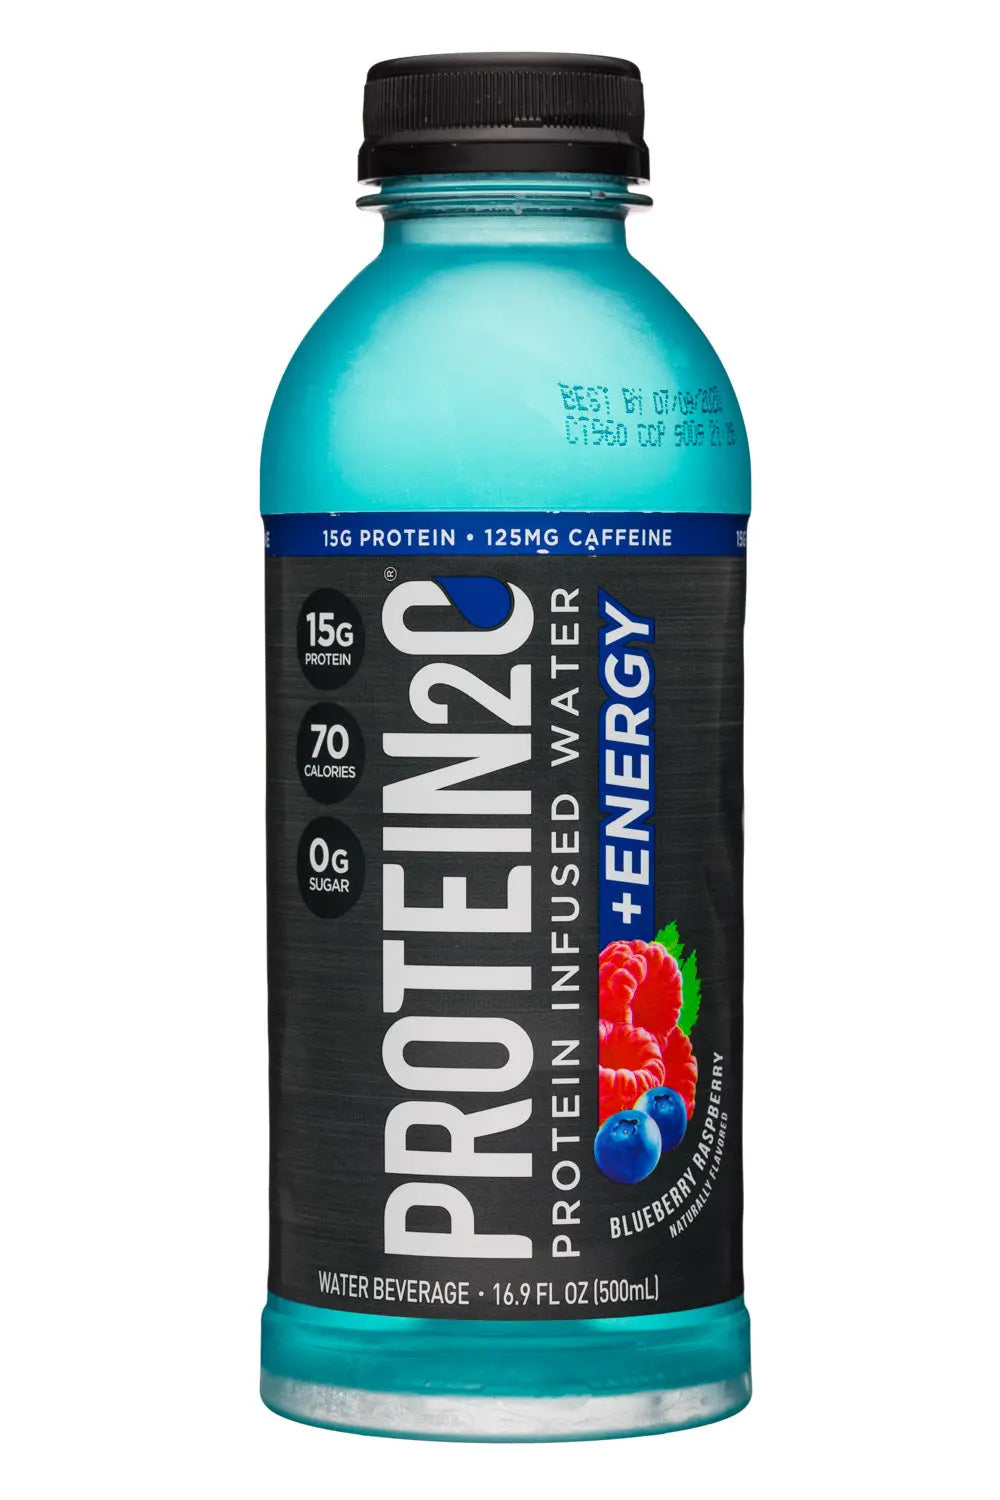 Shop A Refreshing Take on Protein™ - Protein2o